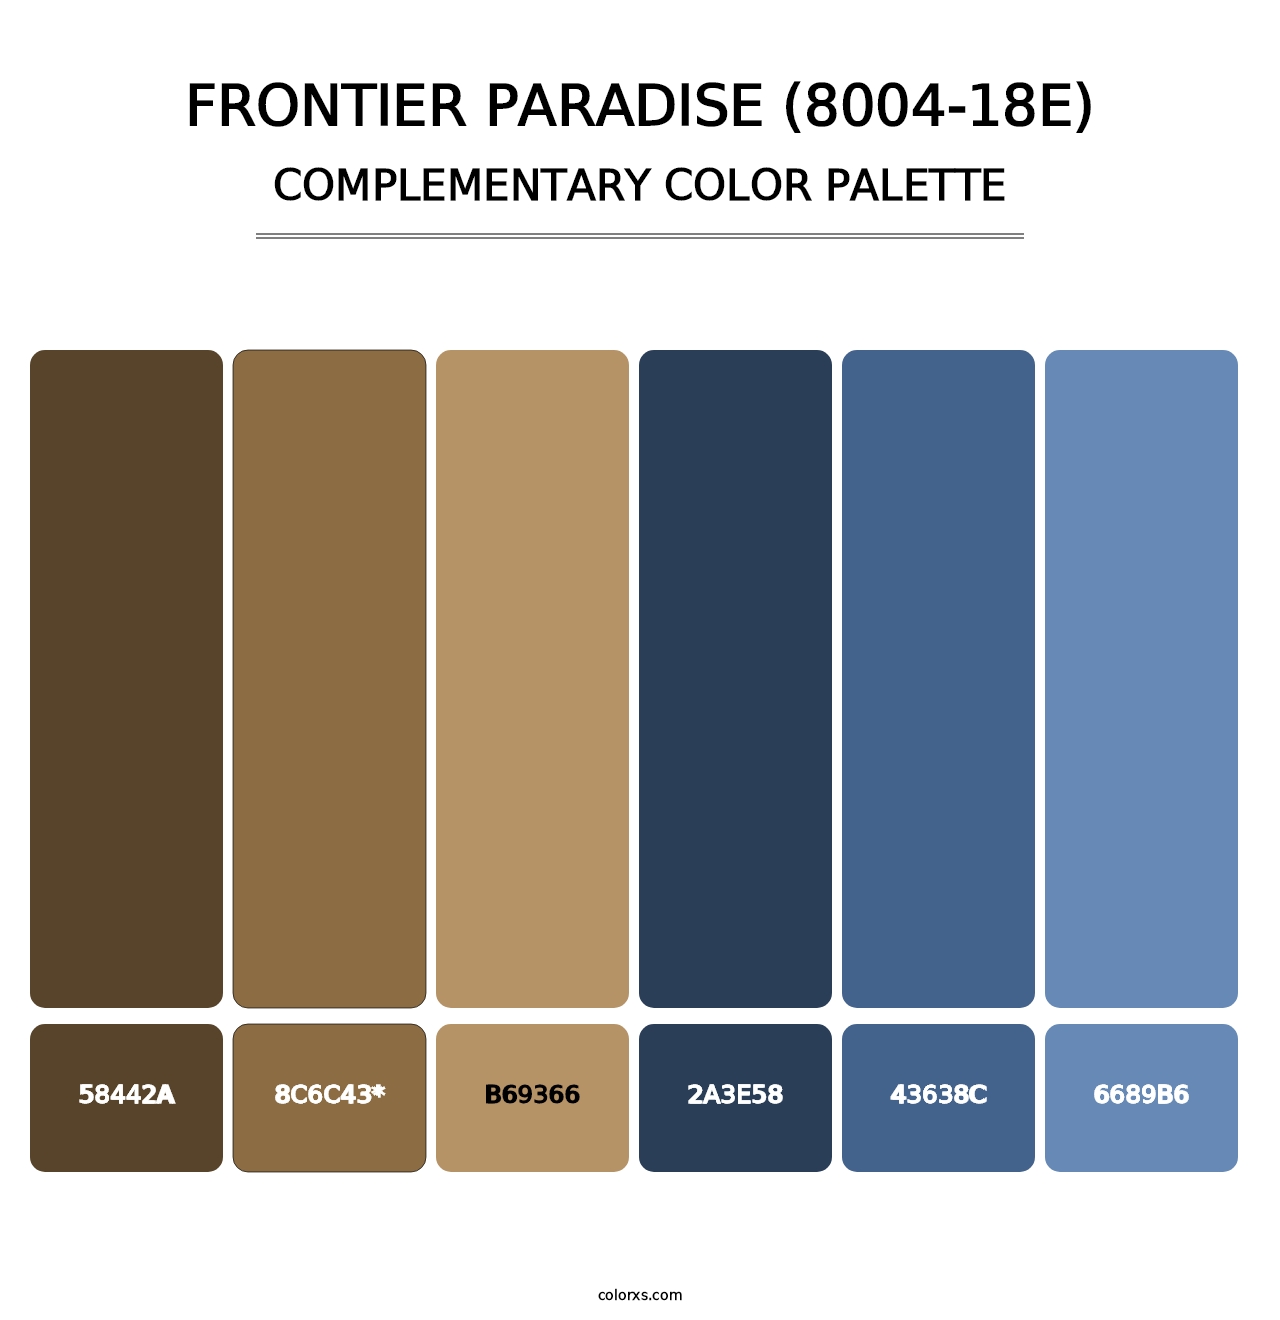 Frontier Paradise (8004-18E) - Complementary Color Palette